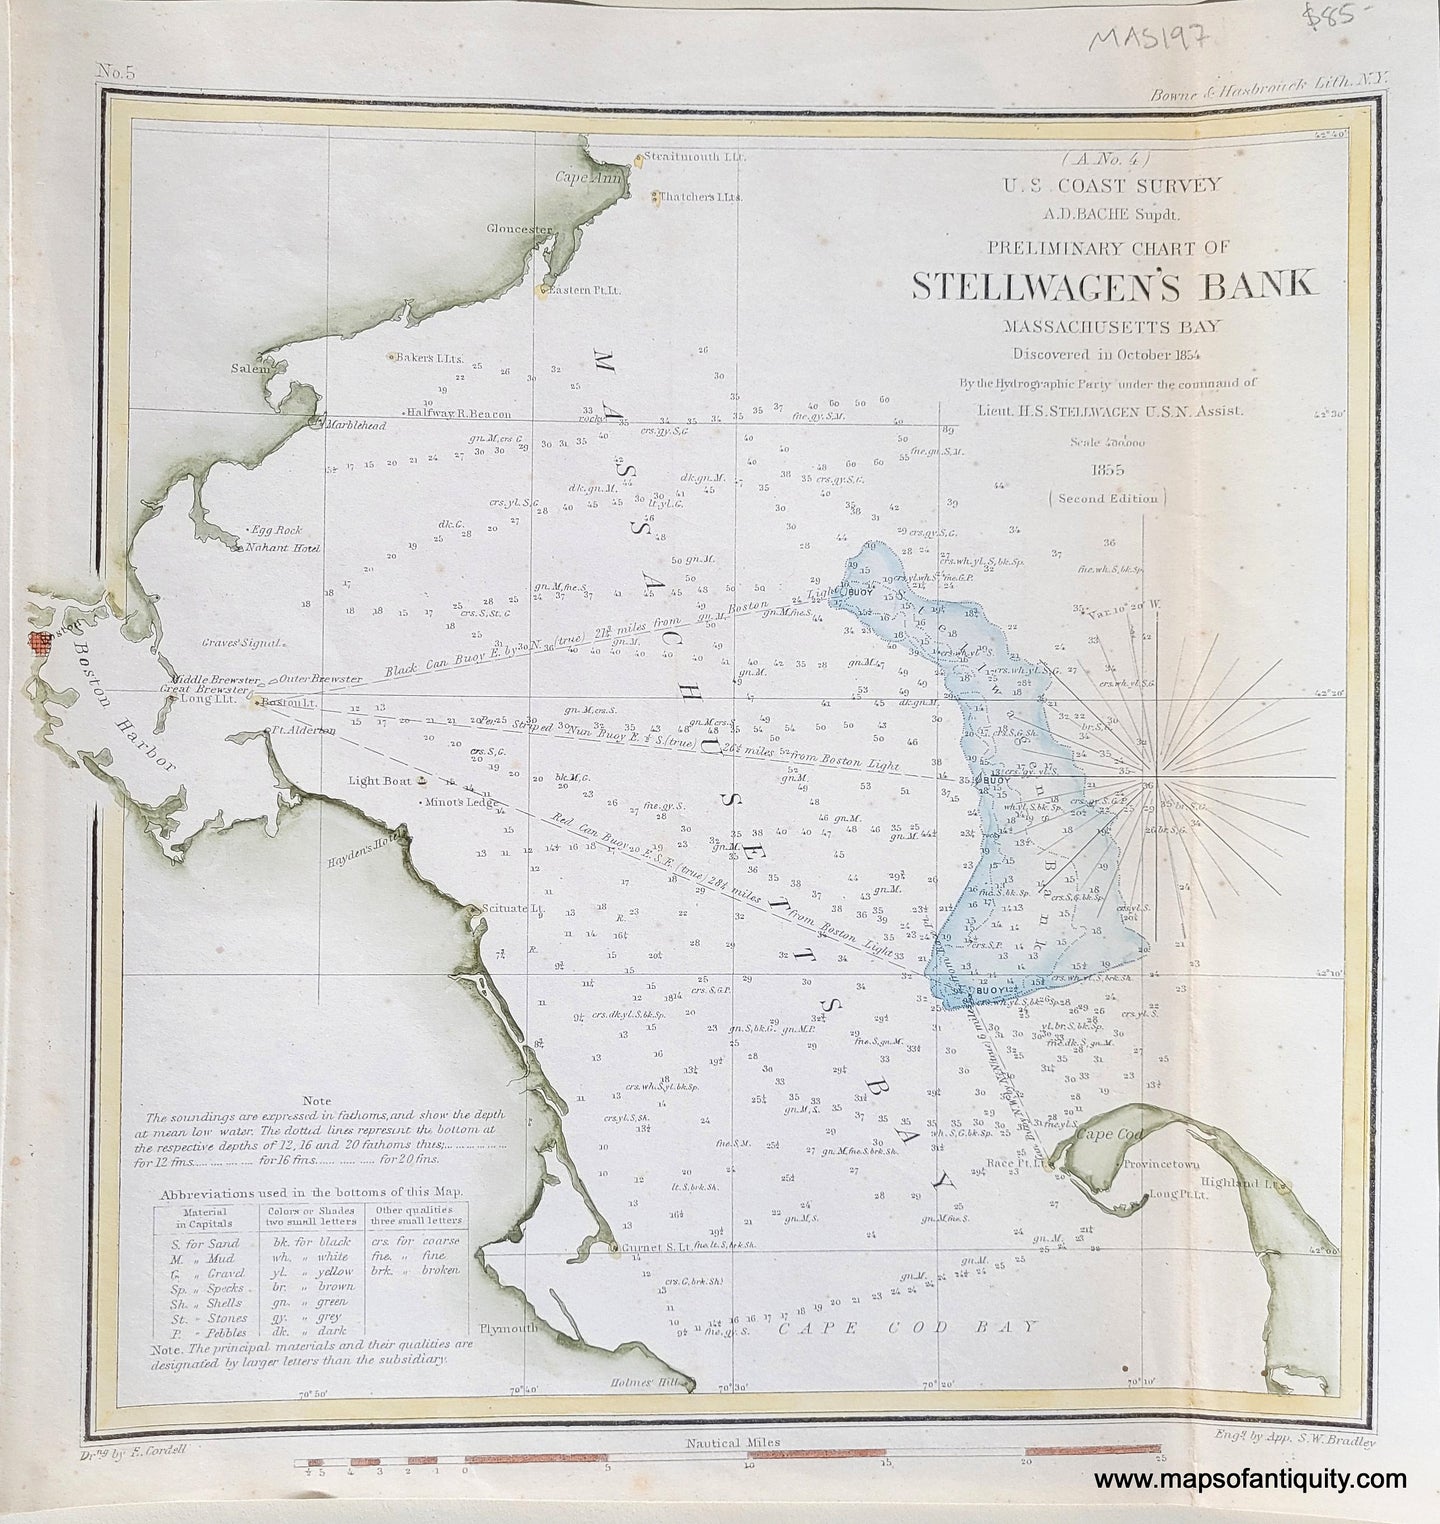 Antique-Nautical-Chart-Preliminary-Chart-of-Stellwagen's-Bank-Massachusetts-Bay-Boston-Salem-Plymouth-Provincetown-Massachusetts-Cape-Cod-and-Islands-1855-U.S.-Coast-Survey-Maps-Of-Antiquity